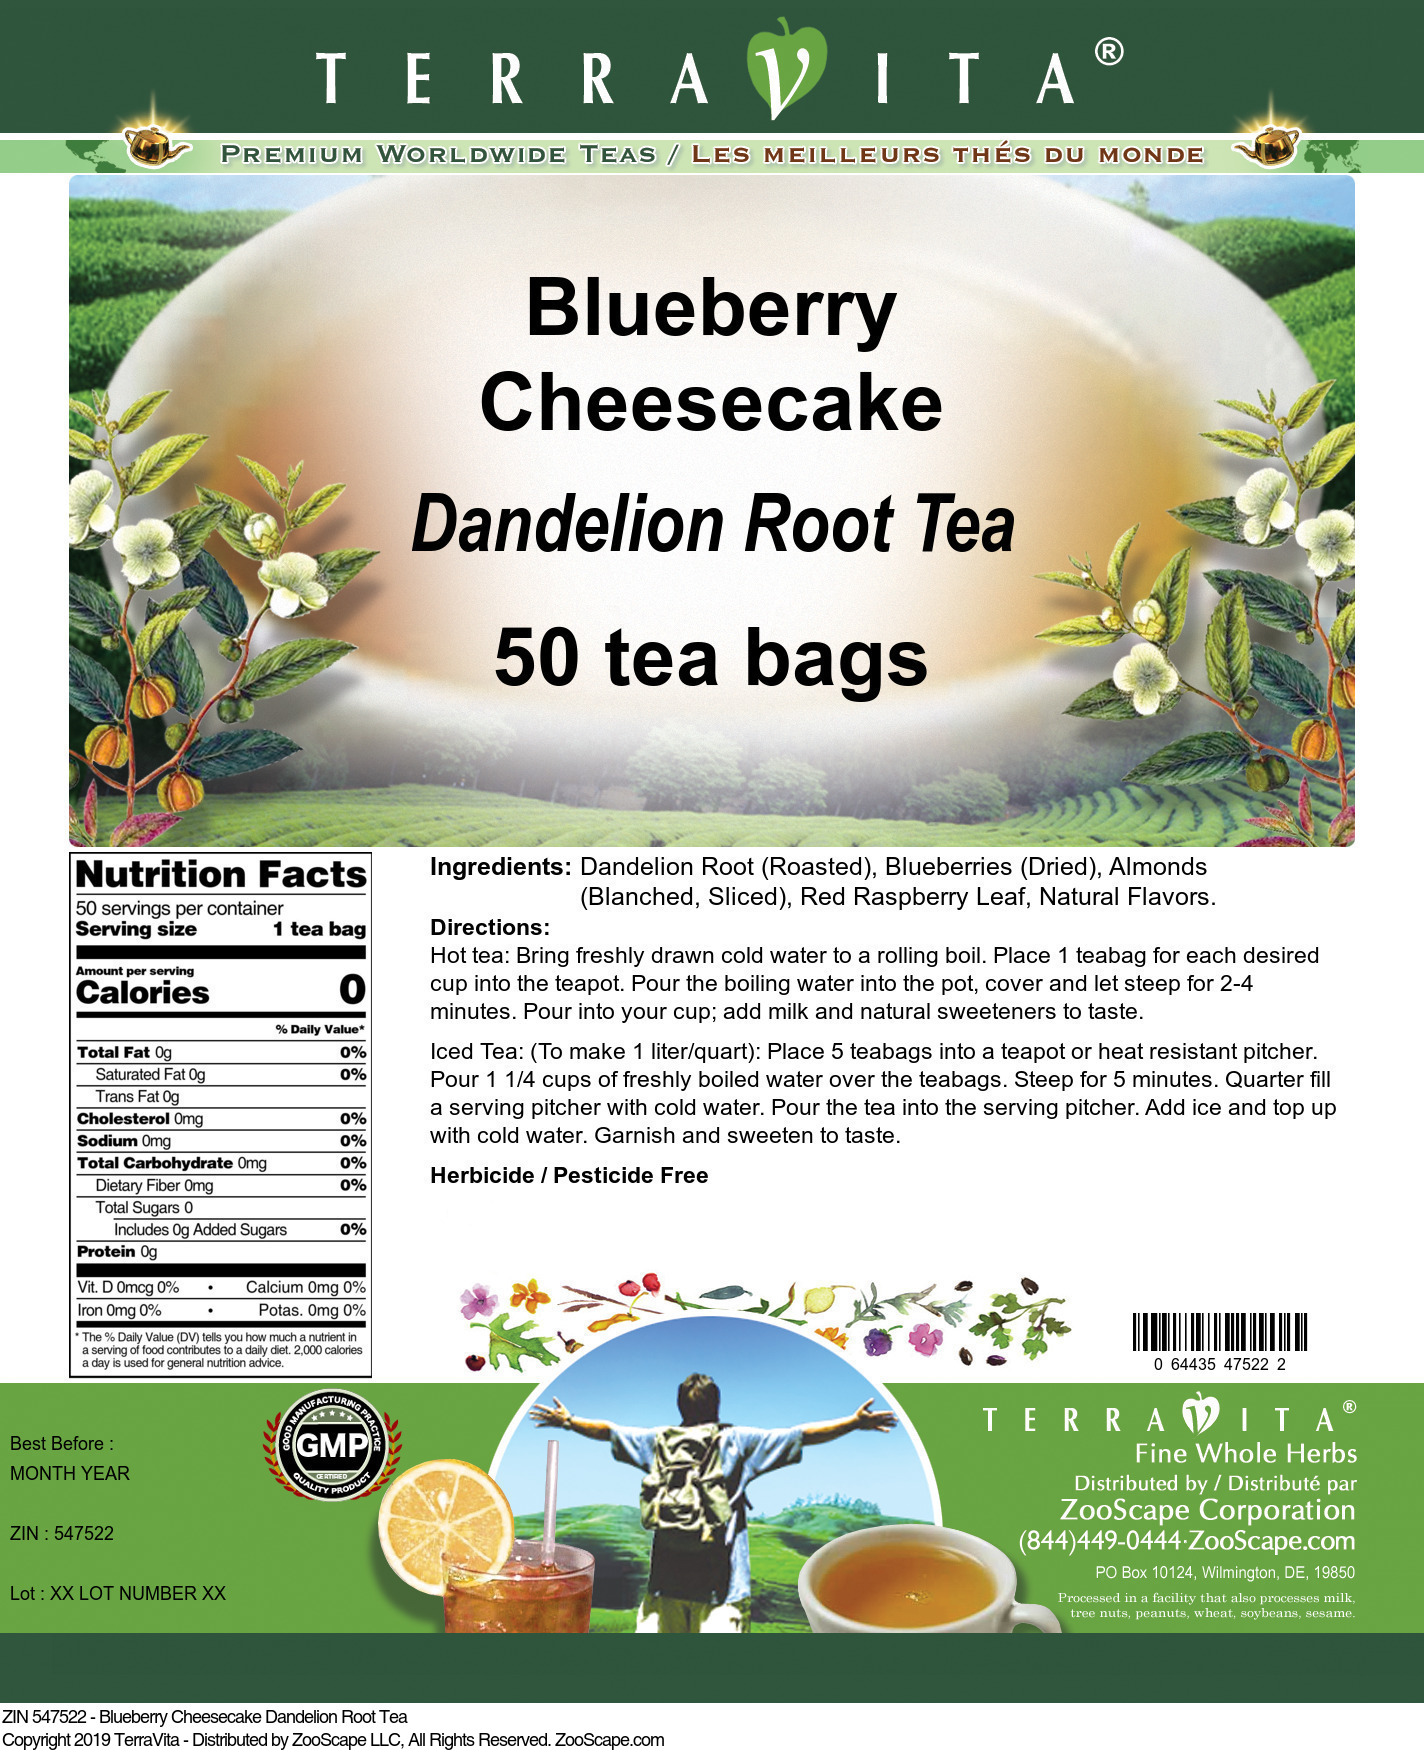 Blueberry Cheesecake Dandelion Root Tea - Label